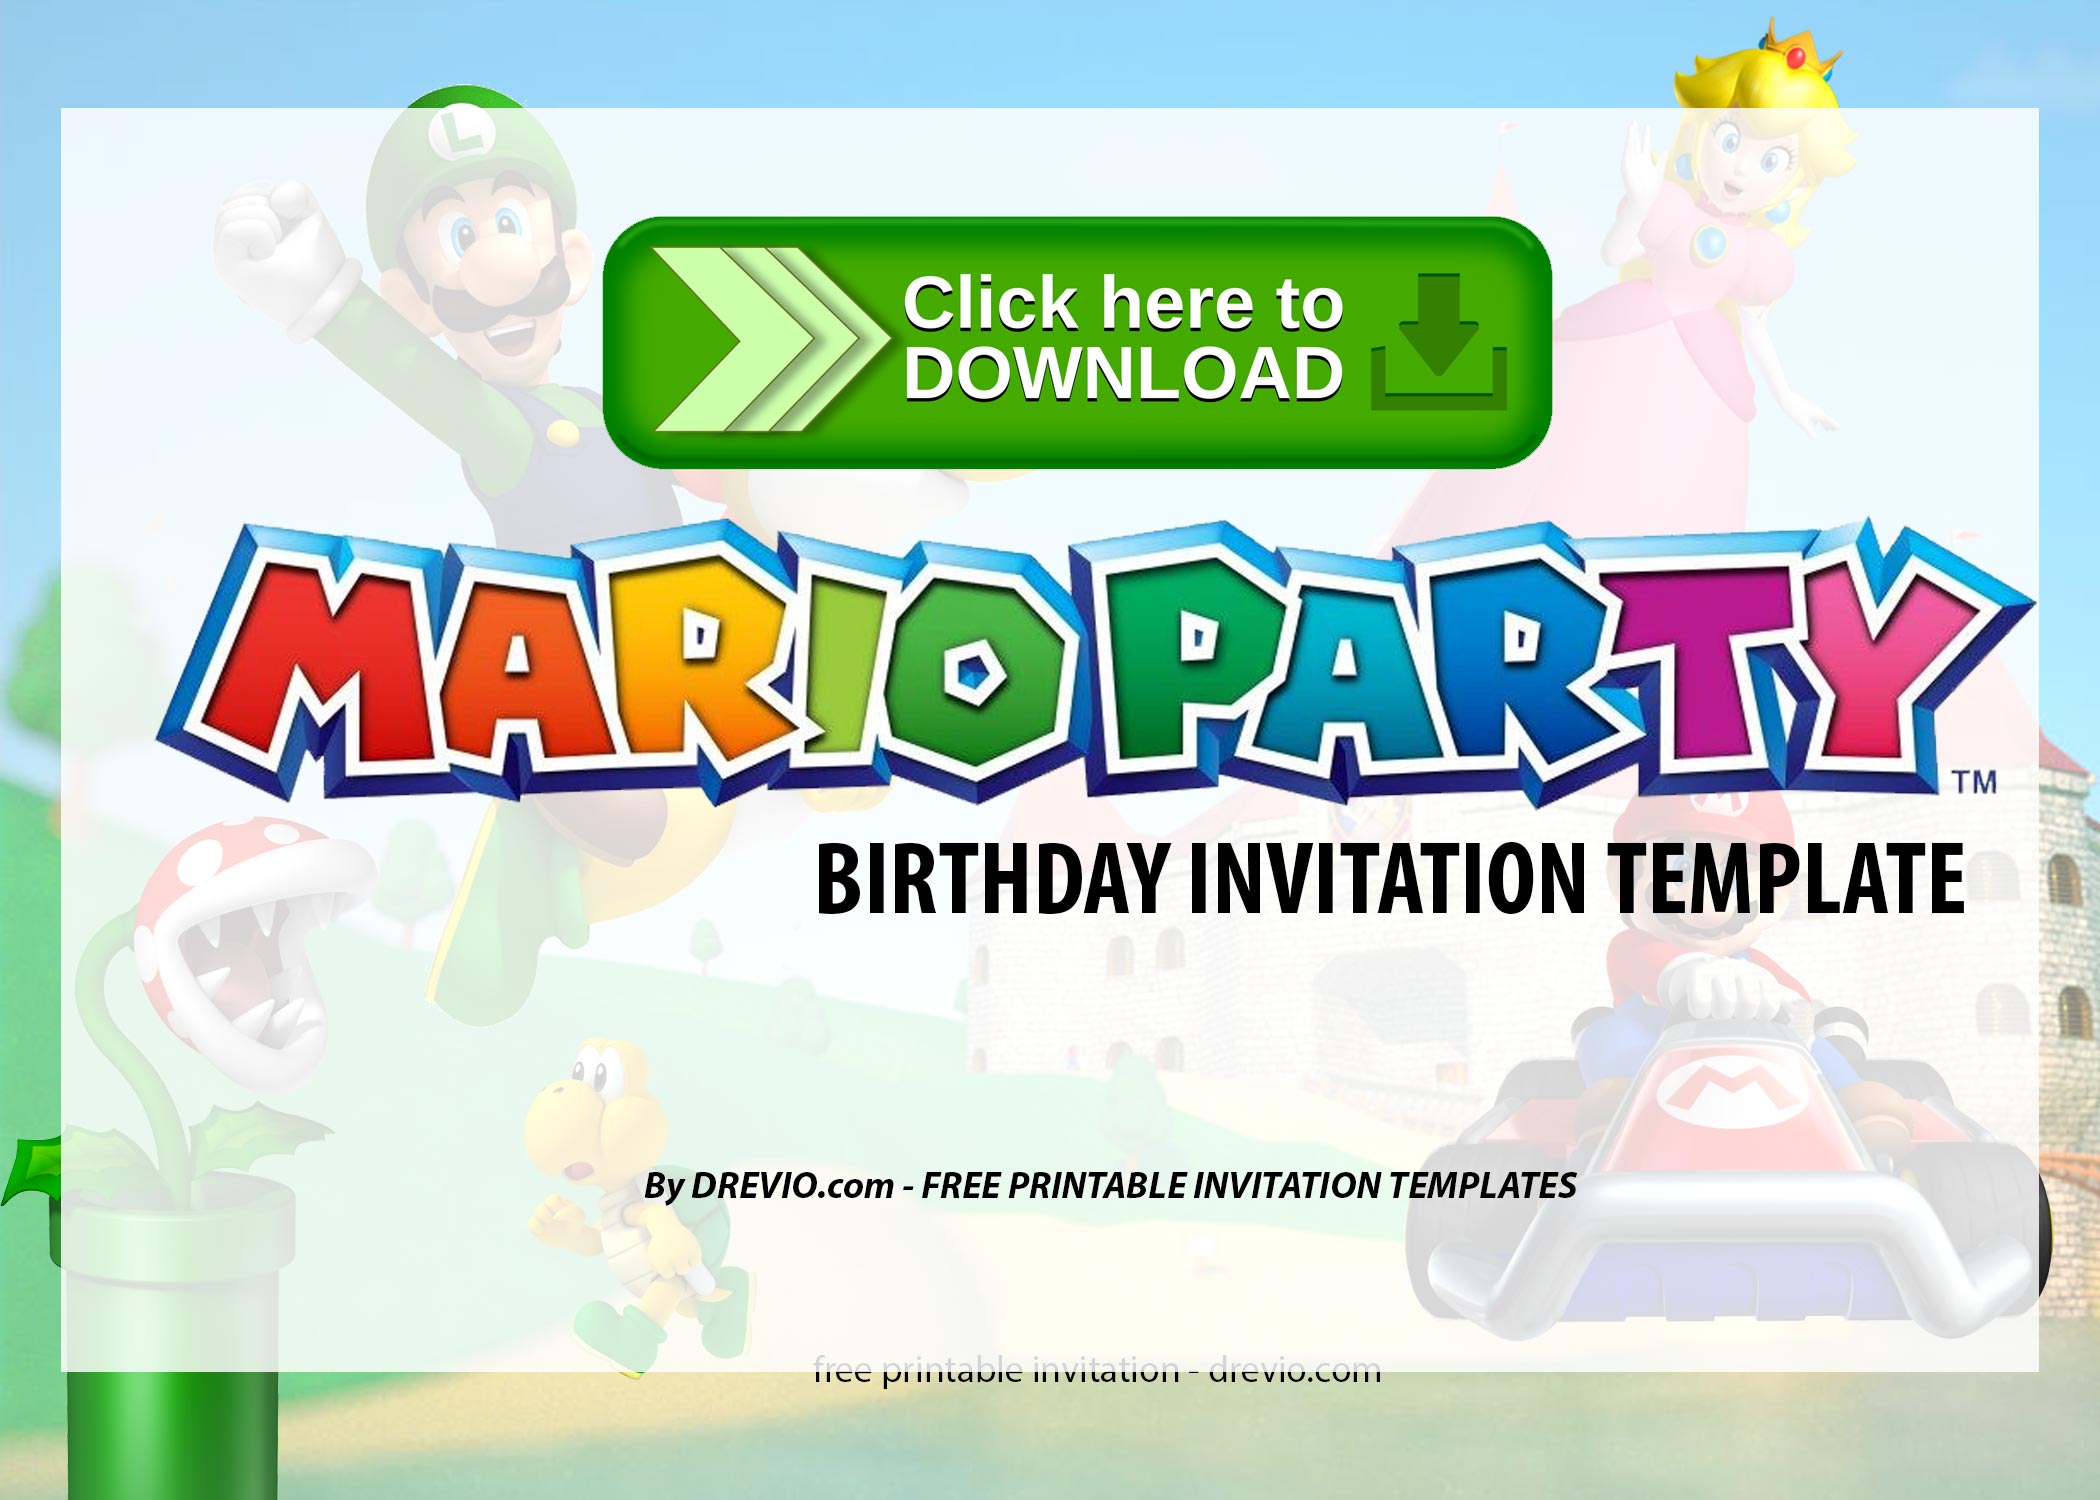 FREE Printable Super Mario Party Birthday Invitation Templates  Download  Hundreds FREE PRINTABLE Birthday Invitation Templates